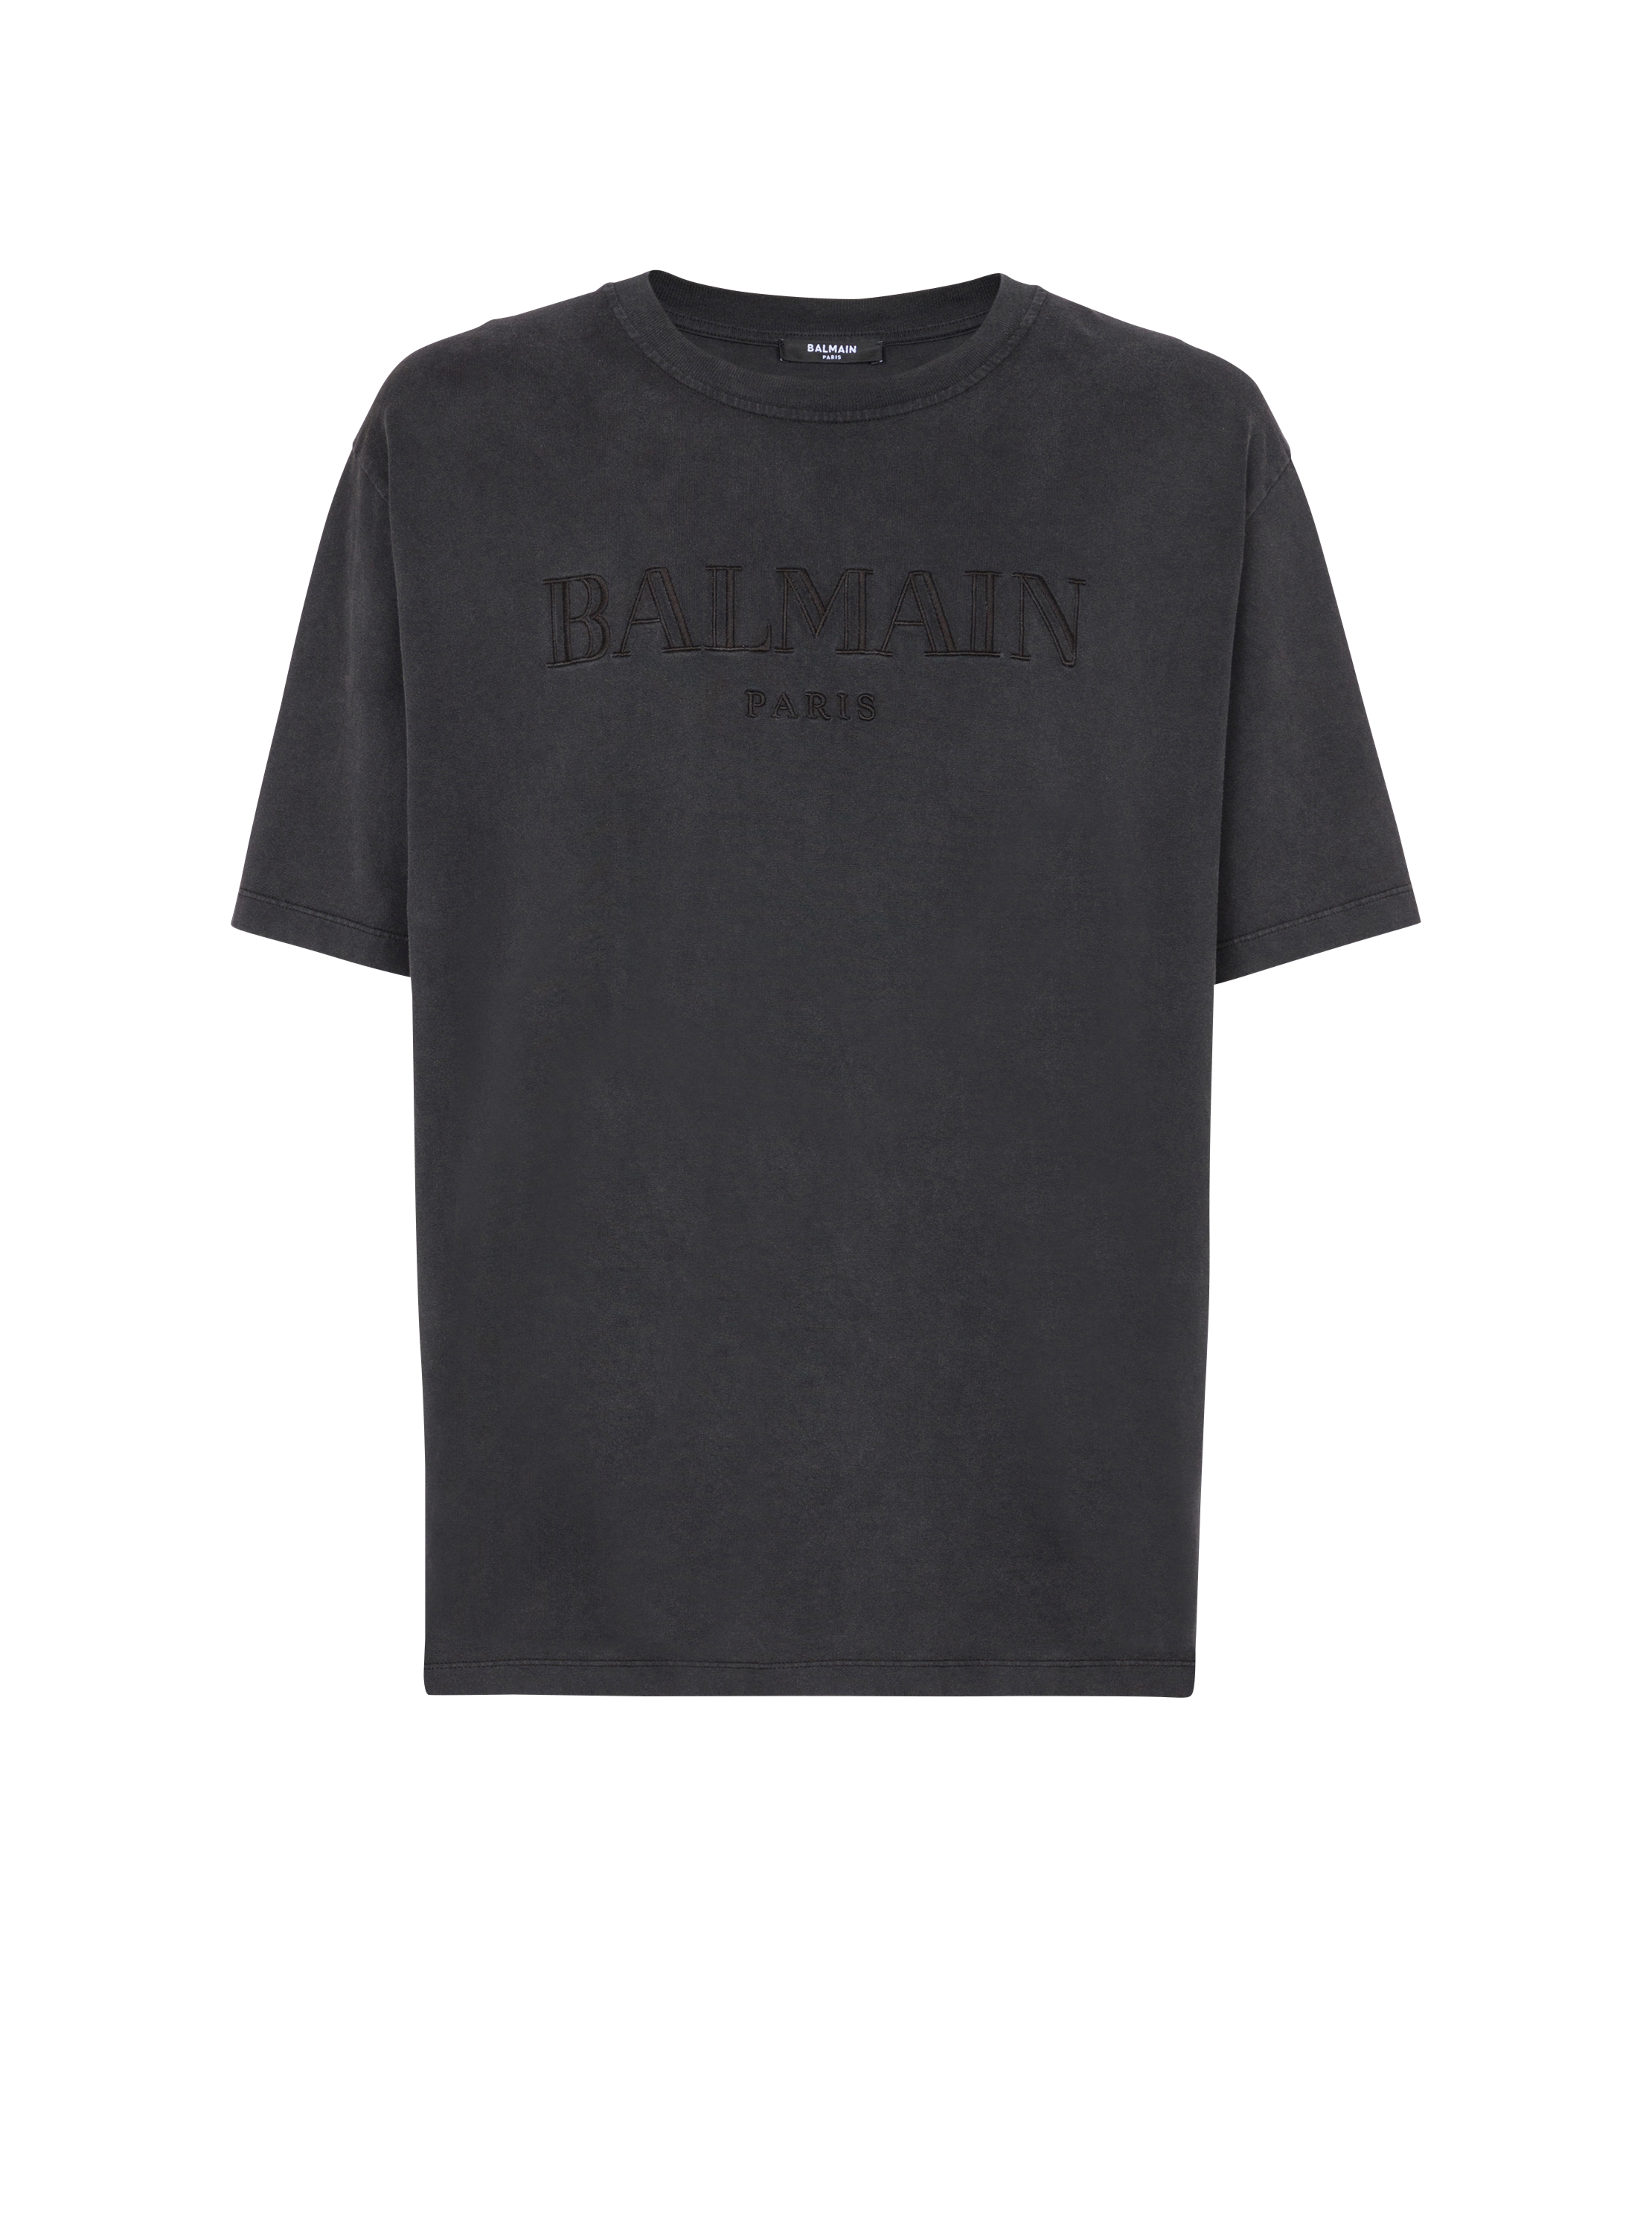 Besticktes Balmain Vintage T-Shirt, grau, hi-res